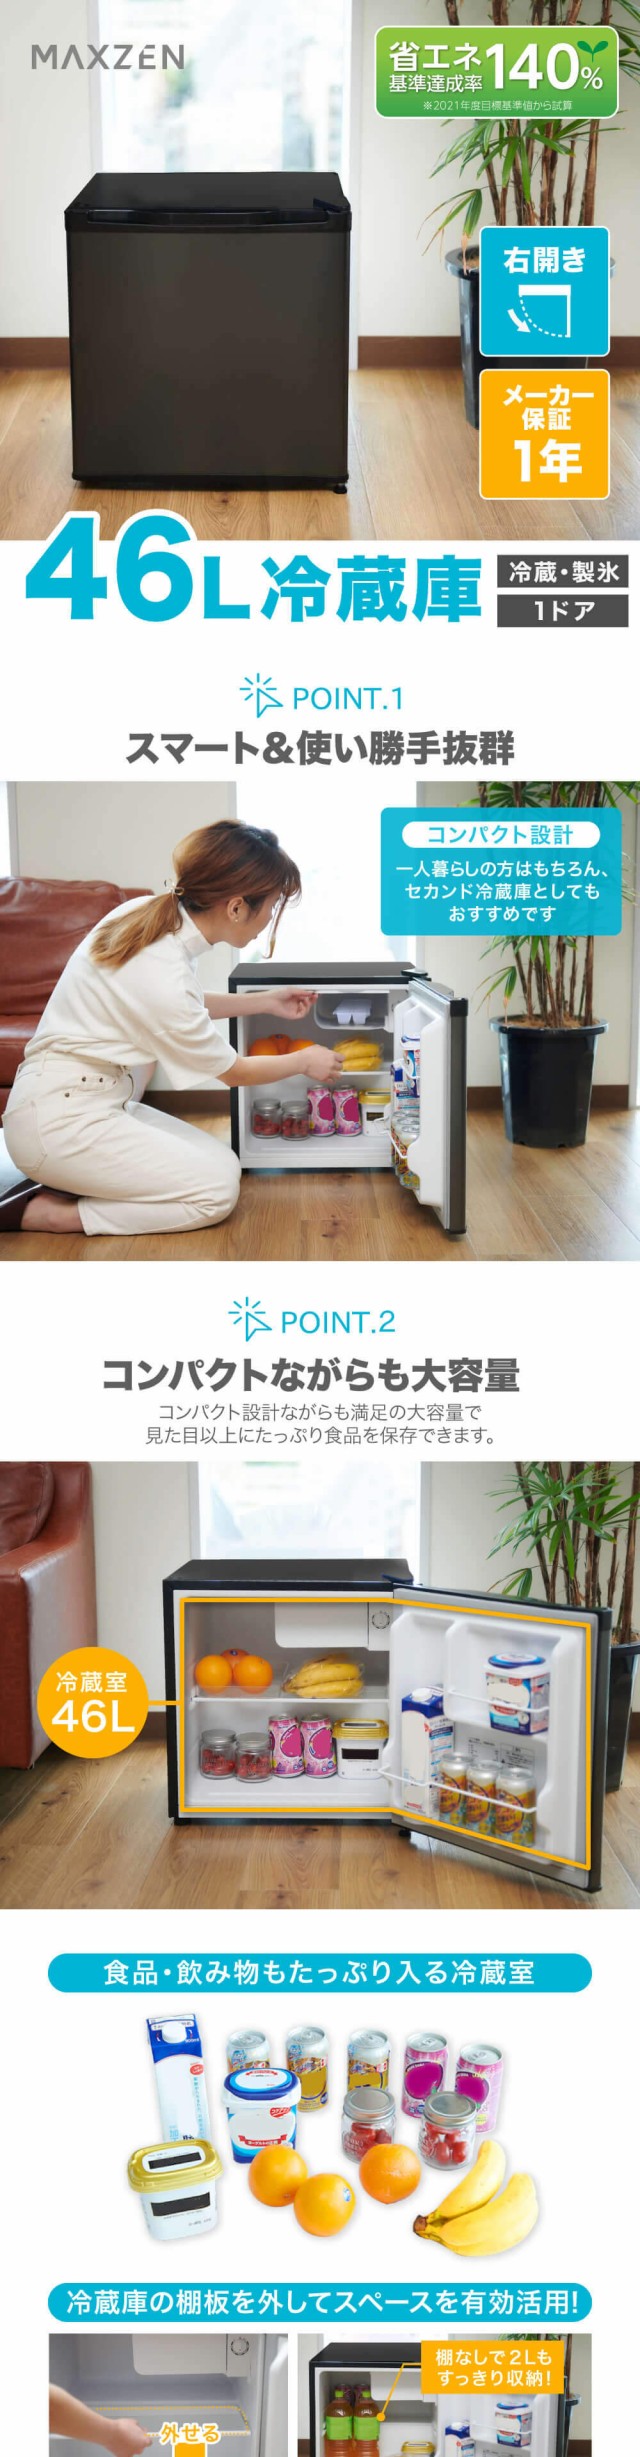 MAXZEN 冷蔵庫 小型 1ドア ひとり暮らし 46L 新生活 コンパクト ミニ 